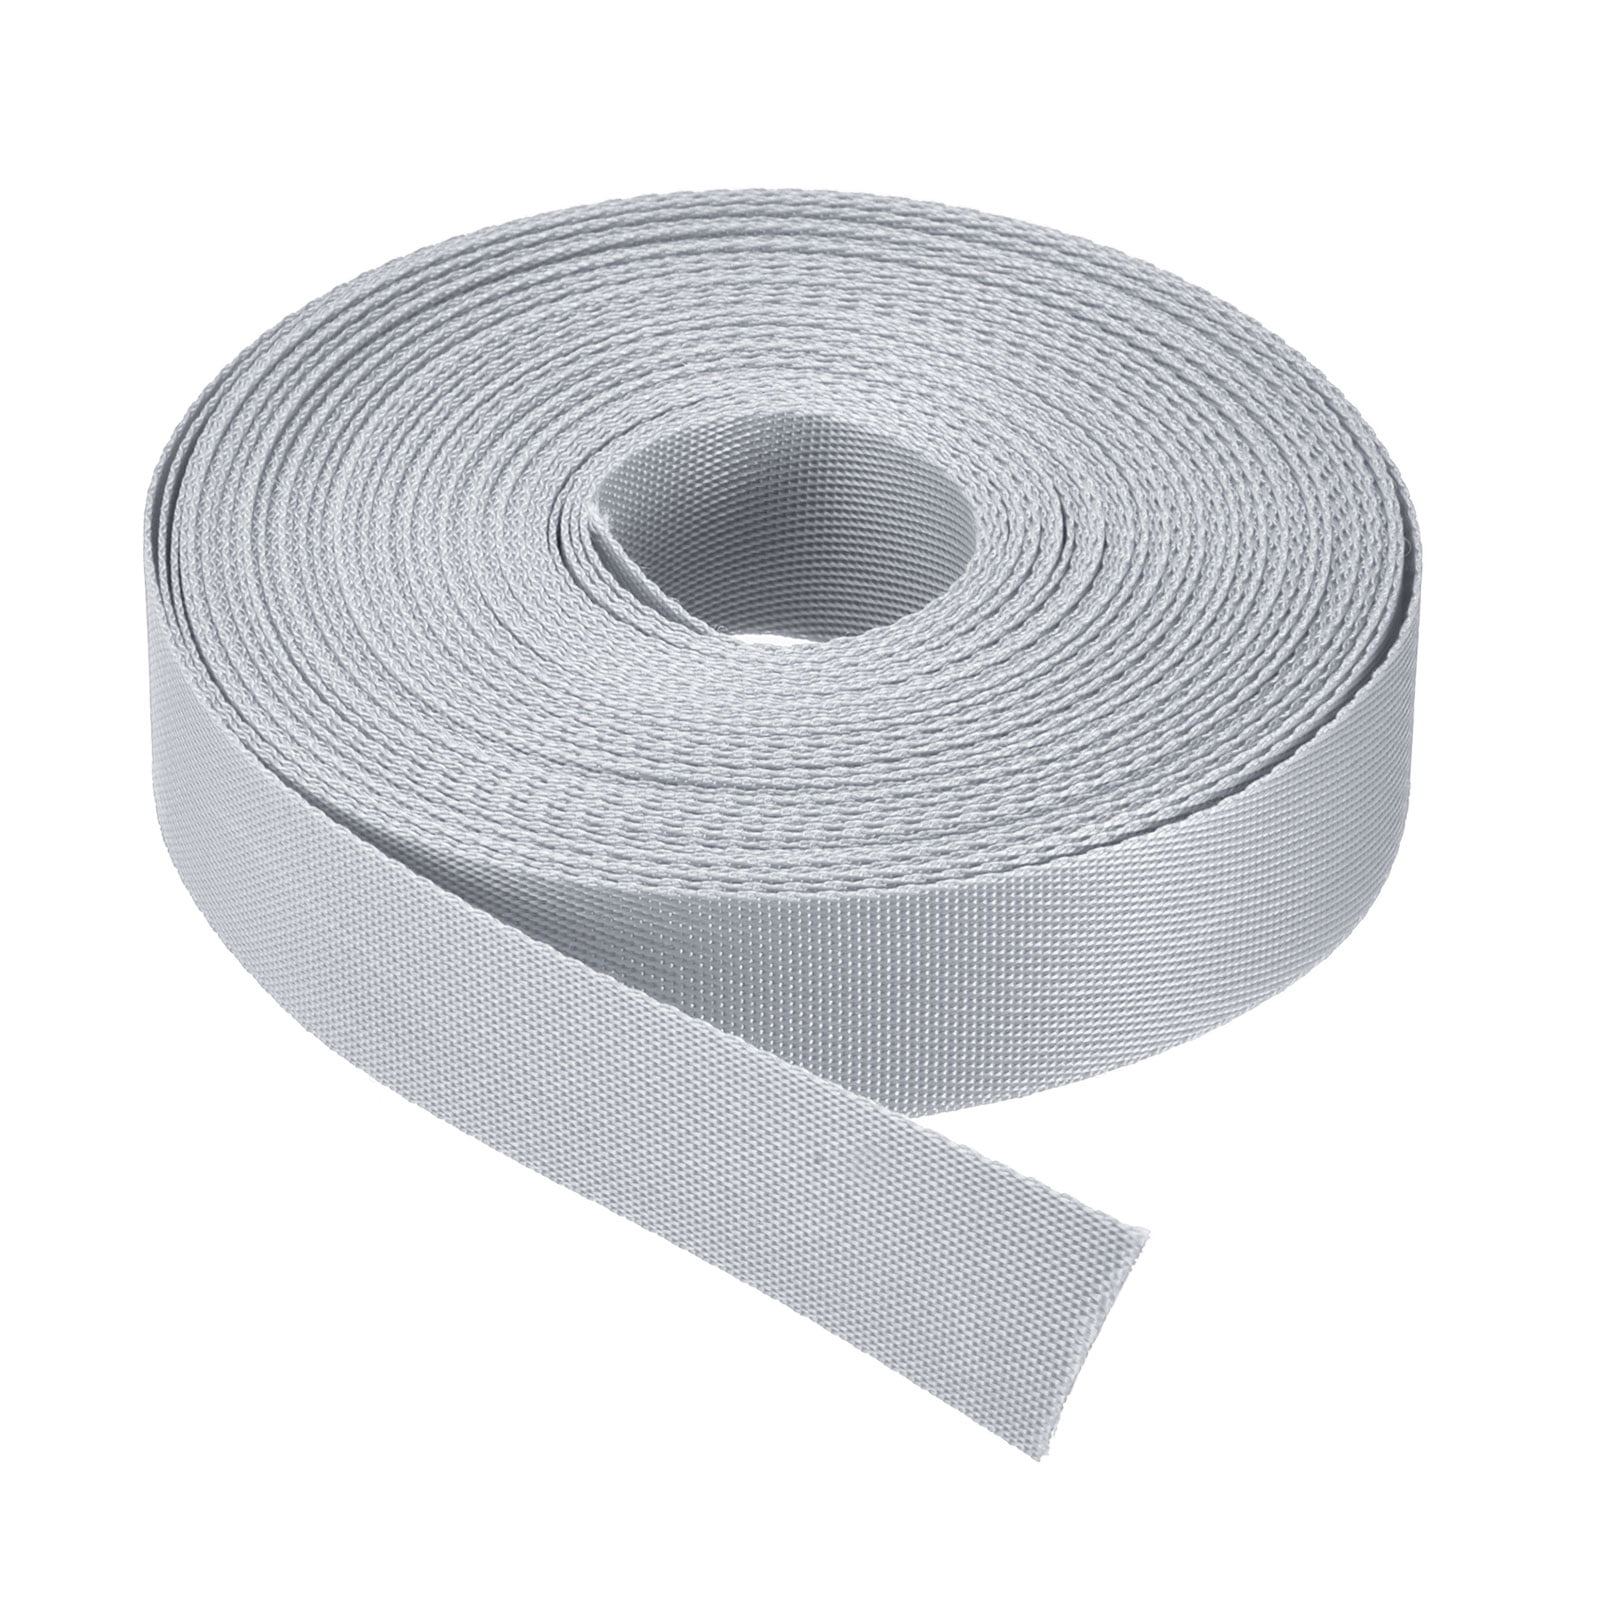 1 Inch Silver Nylon Webbing - Medium Weight Nylon